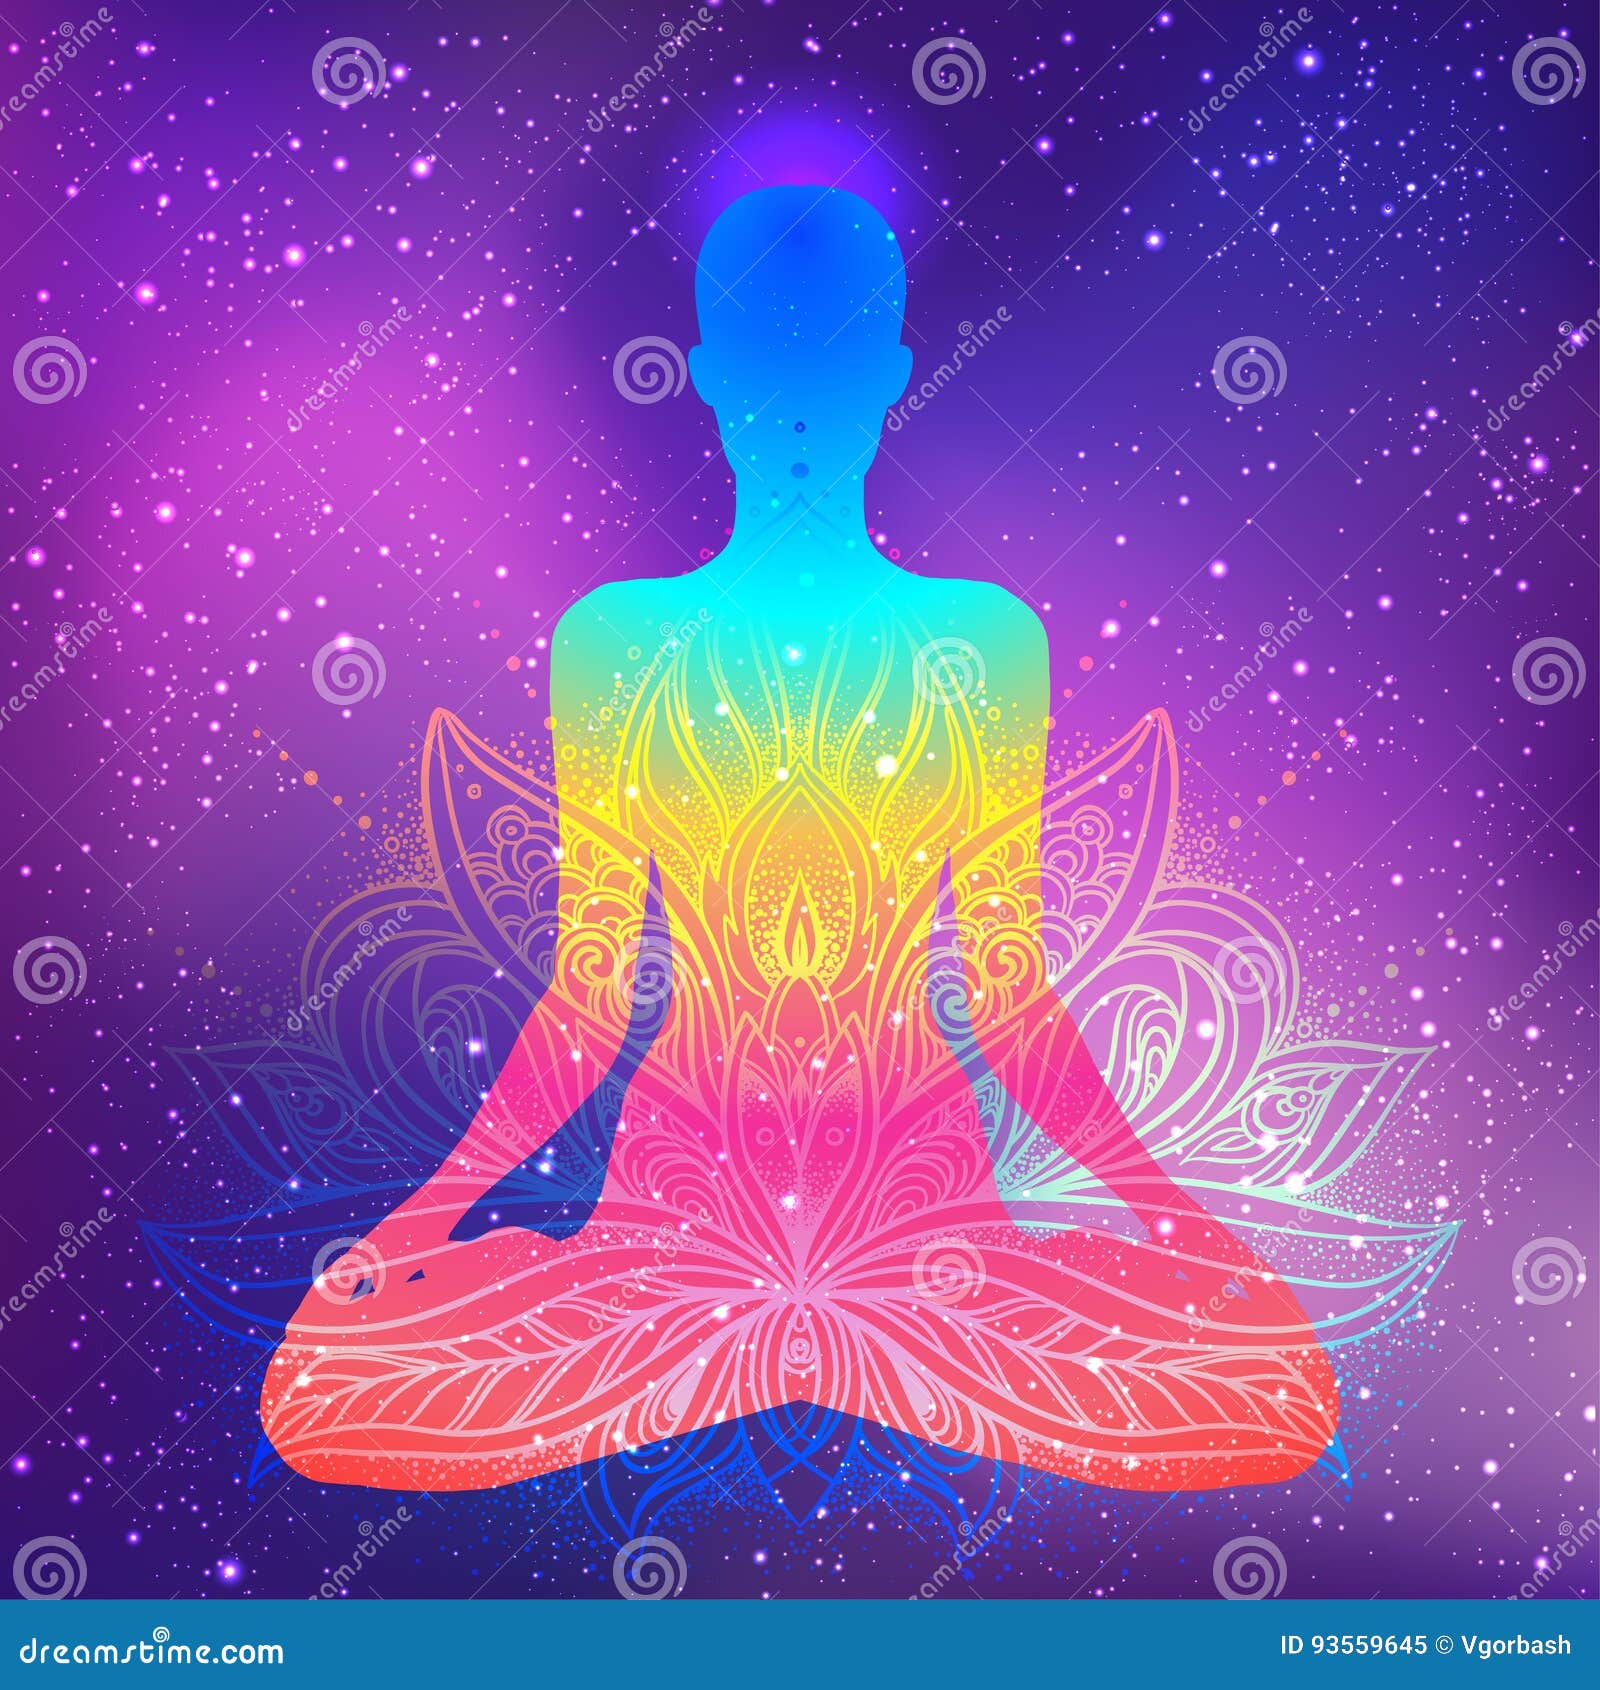 Mandala Yoga Vector Illustrations Graphic by eddecreatives